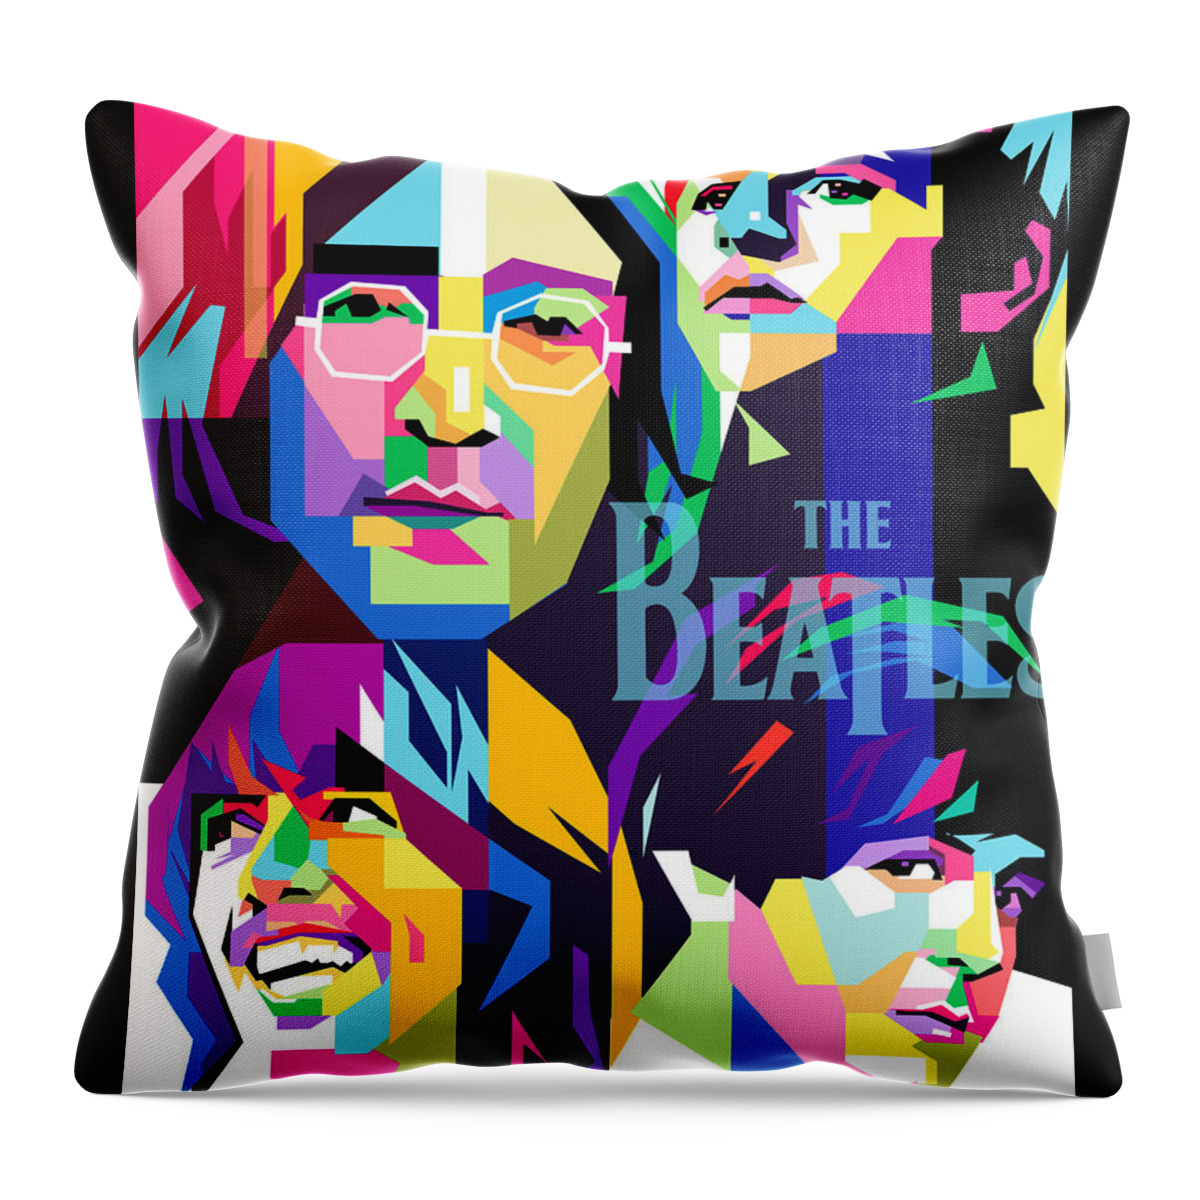 The Beatles Throw Pillow featuring the digital art The Beatles on WPAP Pop Art by Ahmad Nusyirwan